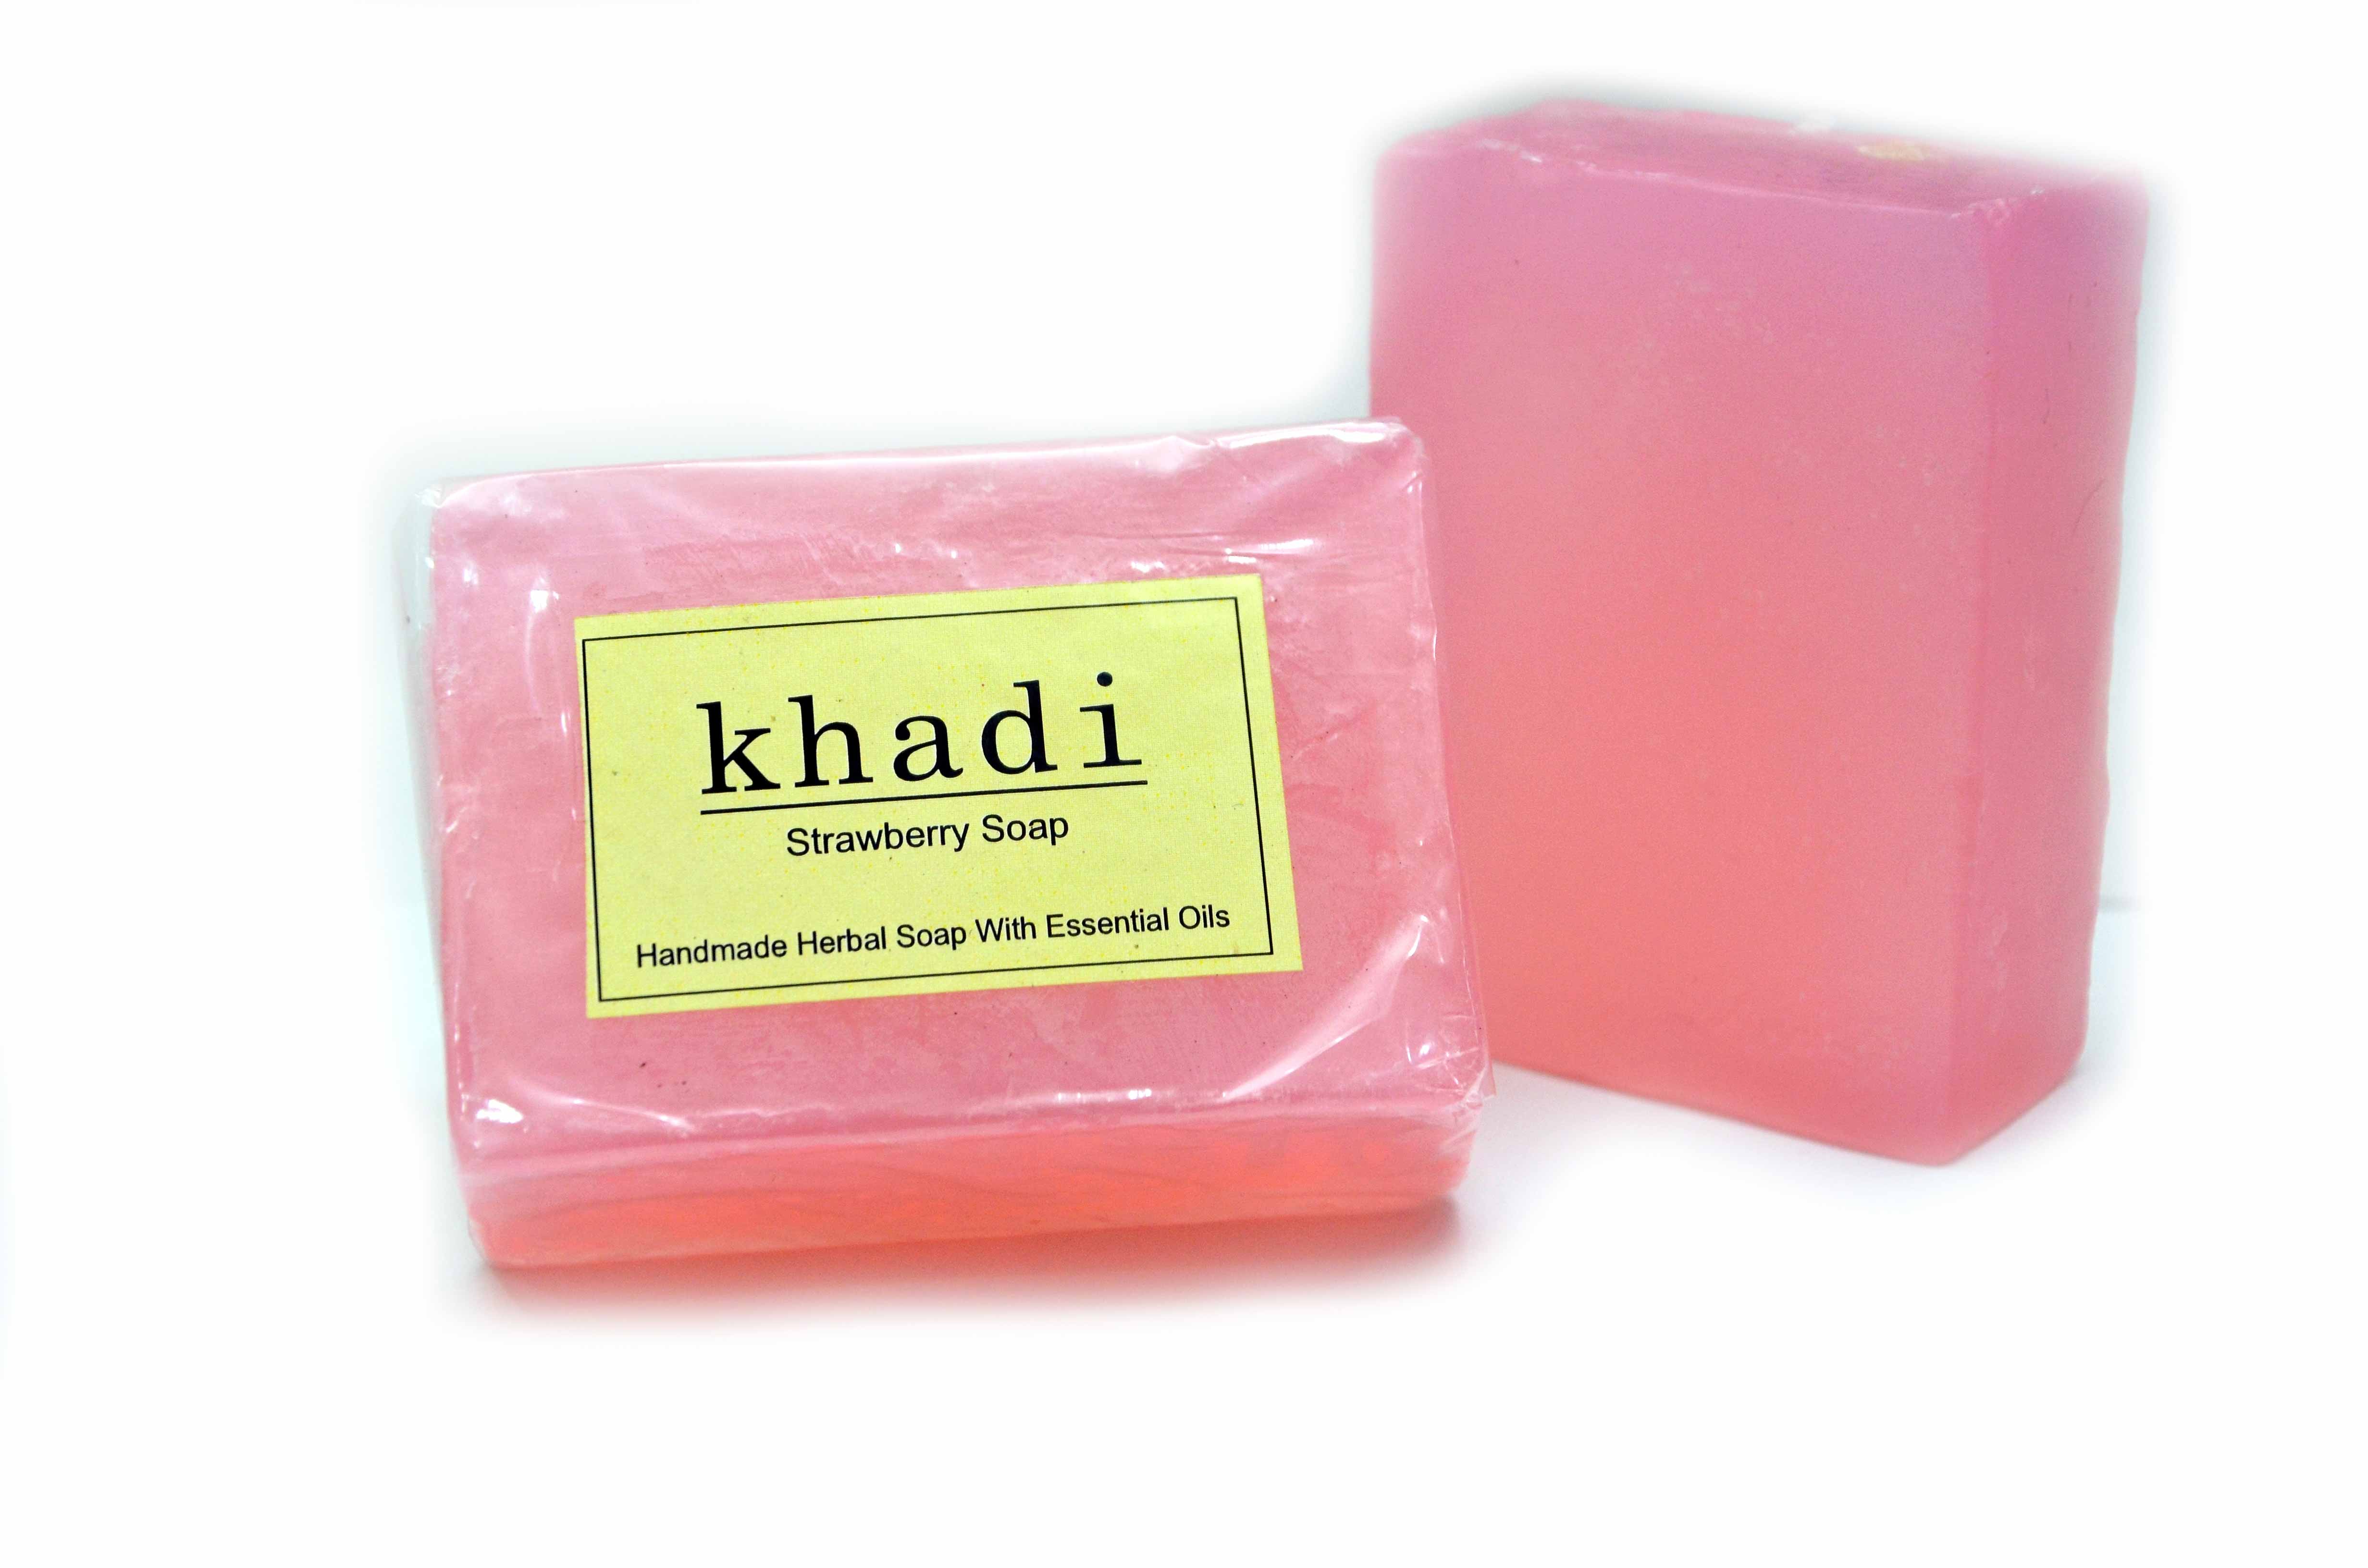 Vagad's Khadi Strawberry Soap